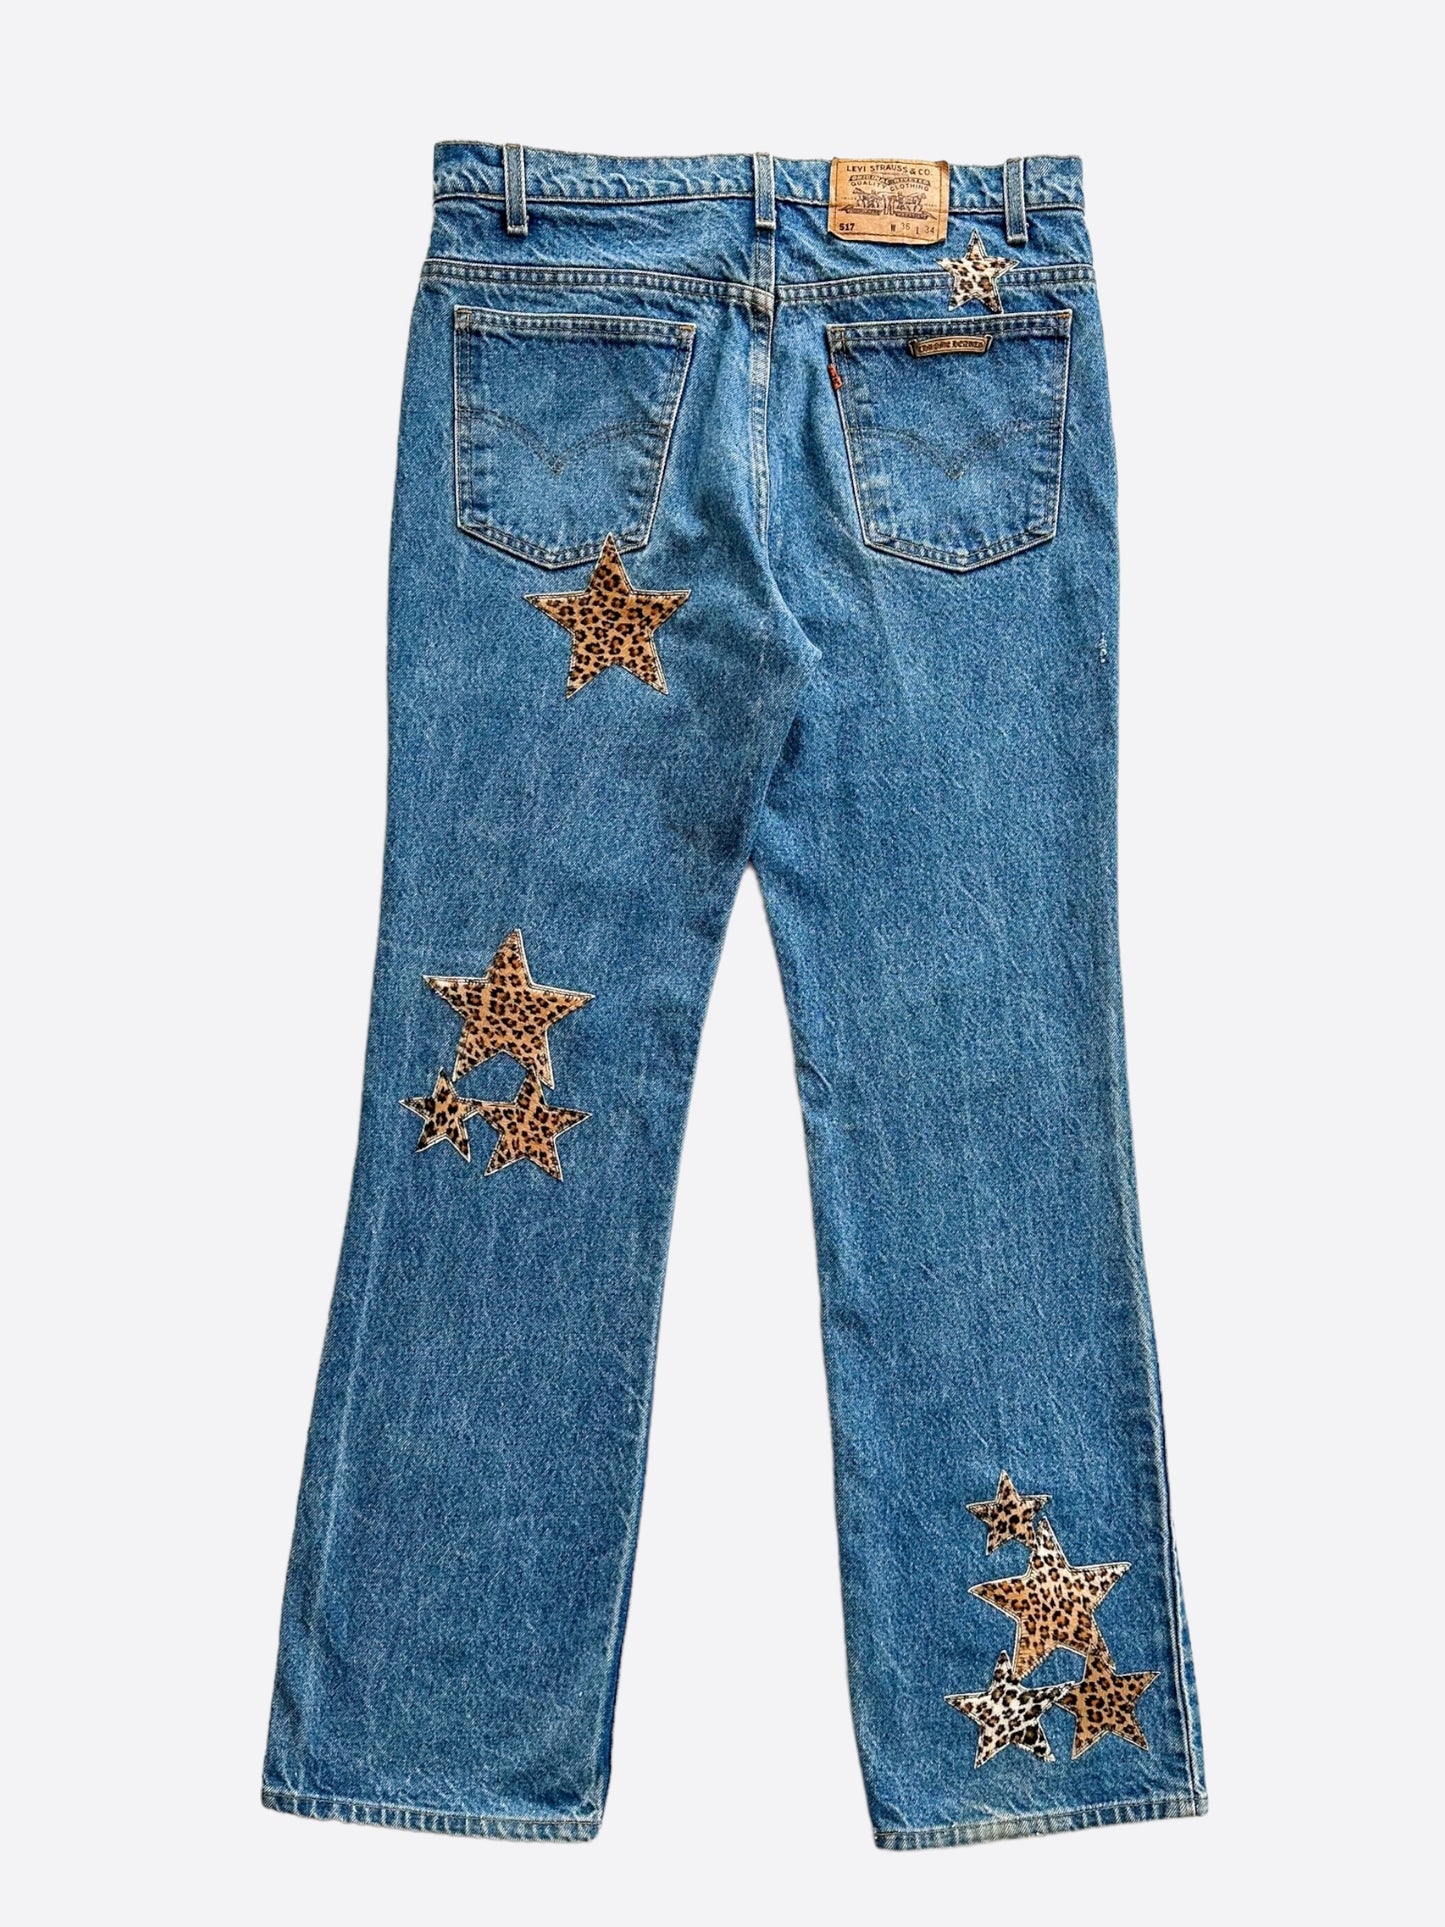 Chrome Hearts Levis Blue Cheetah Star Patch Jeans